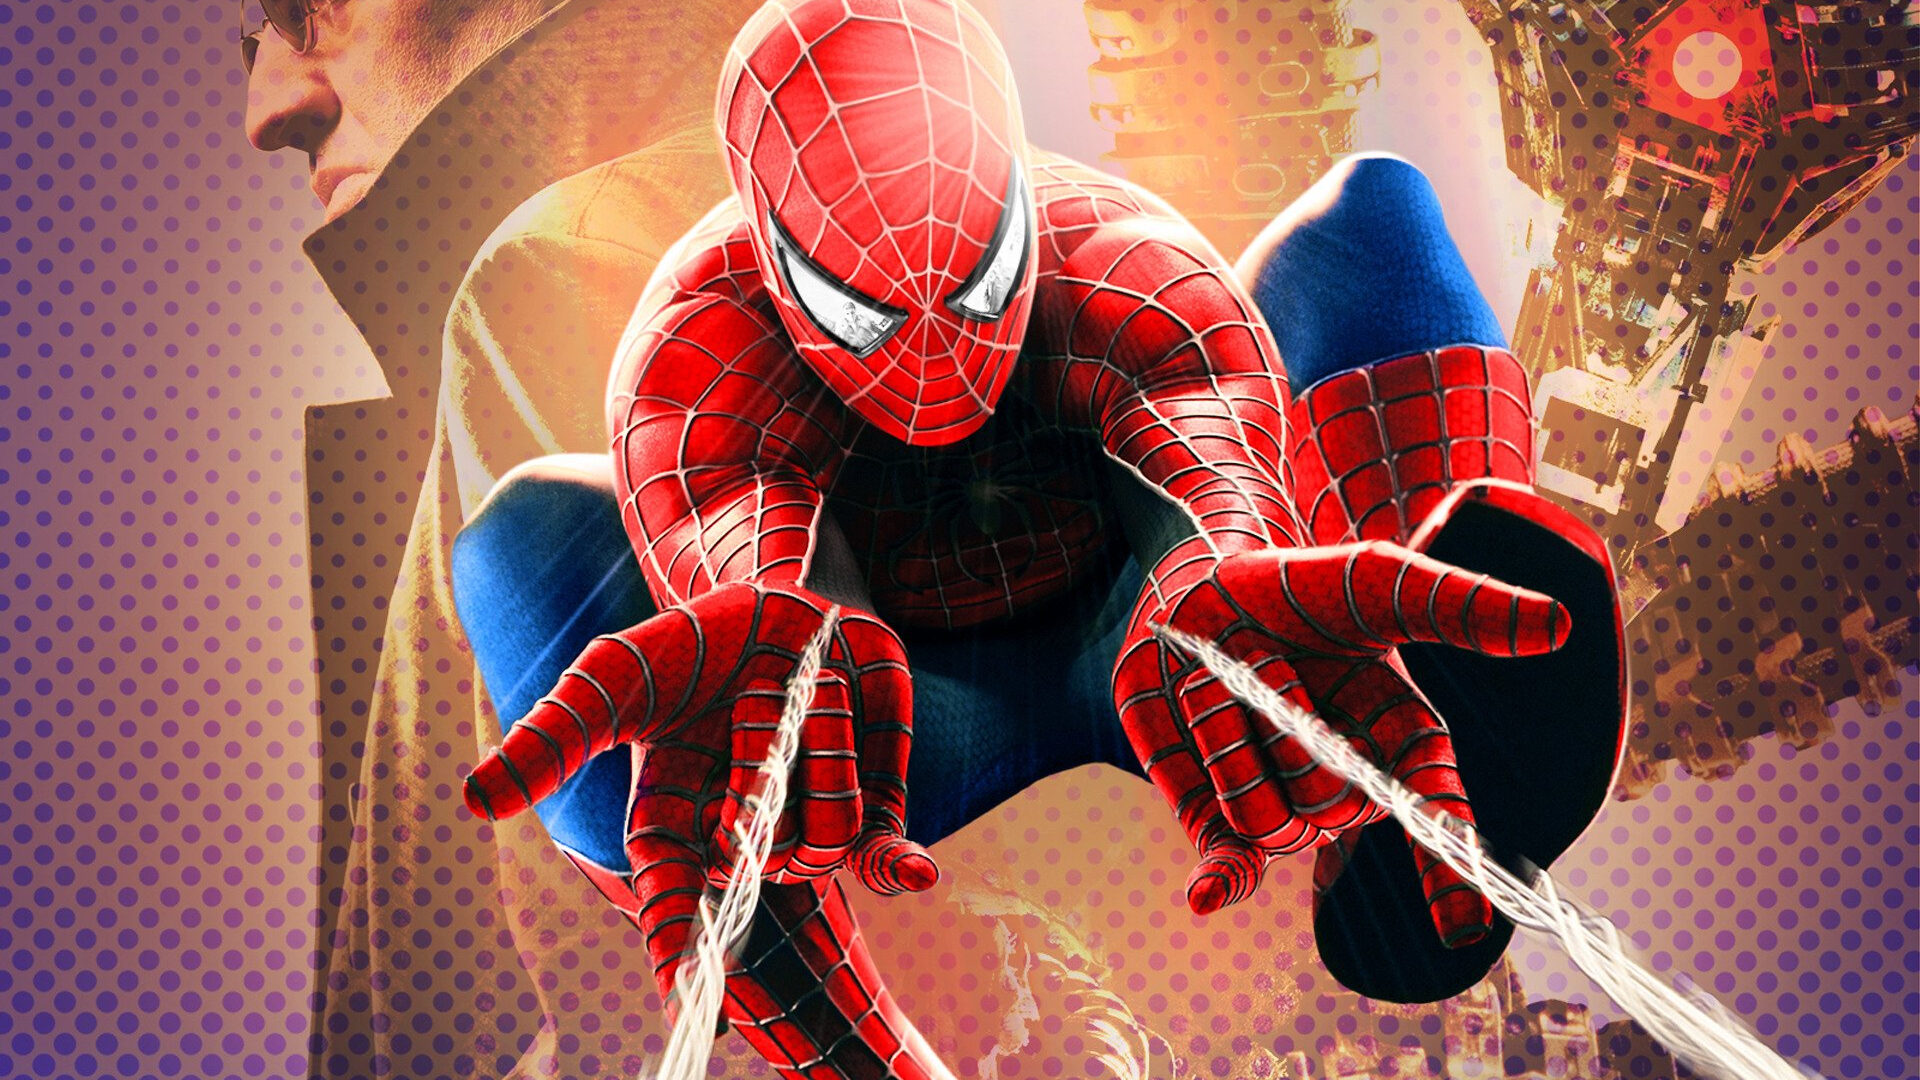 Marvel Spider-Man Web Comic Style Men's Boxer Lounge Shorts